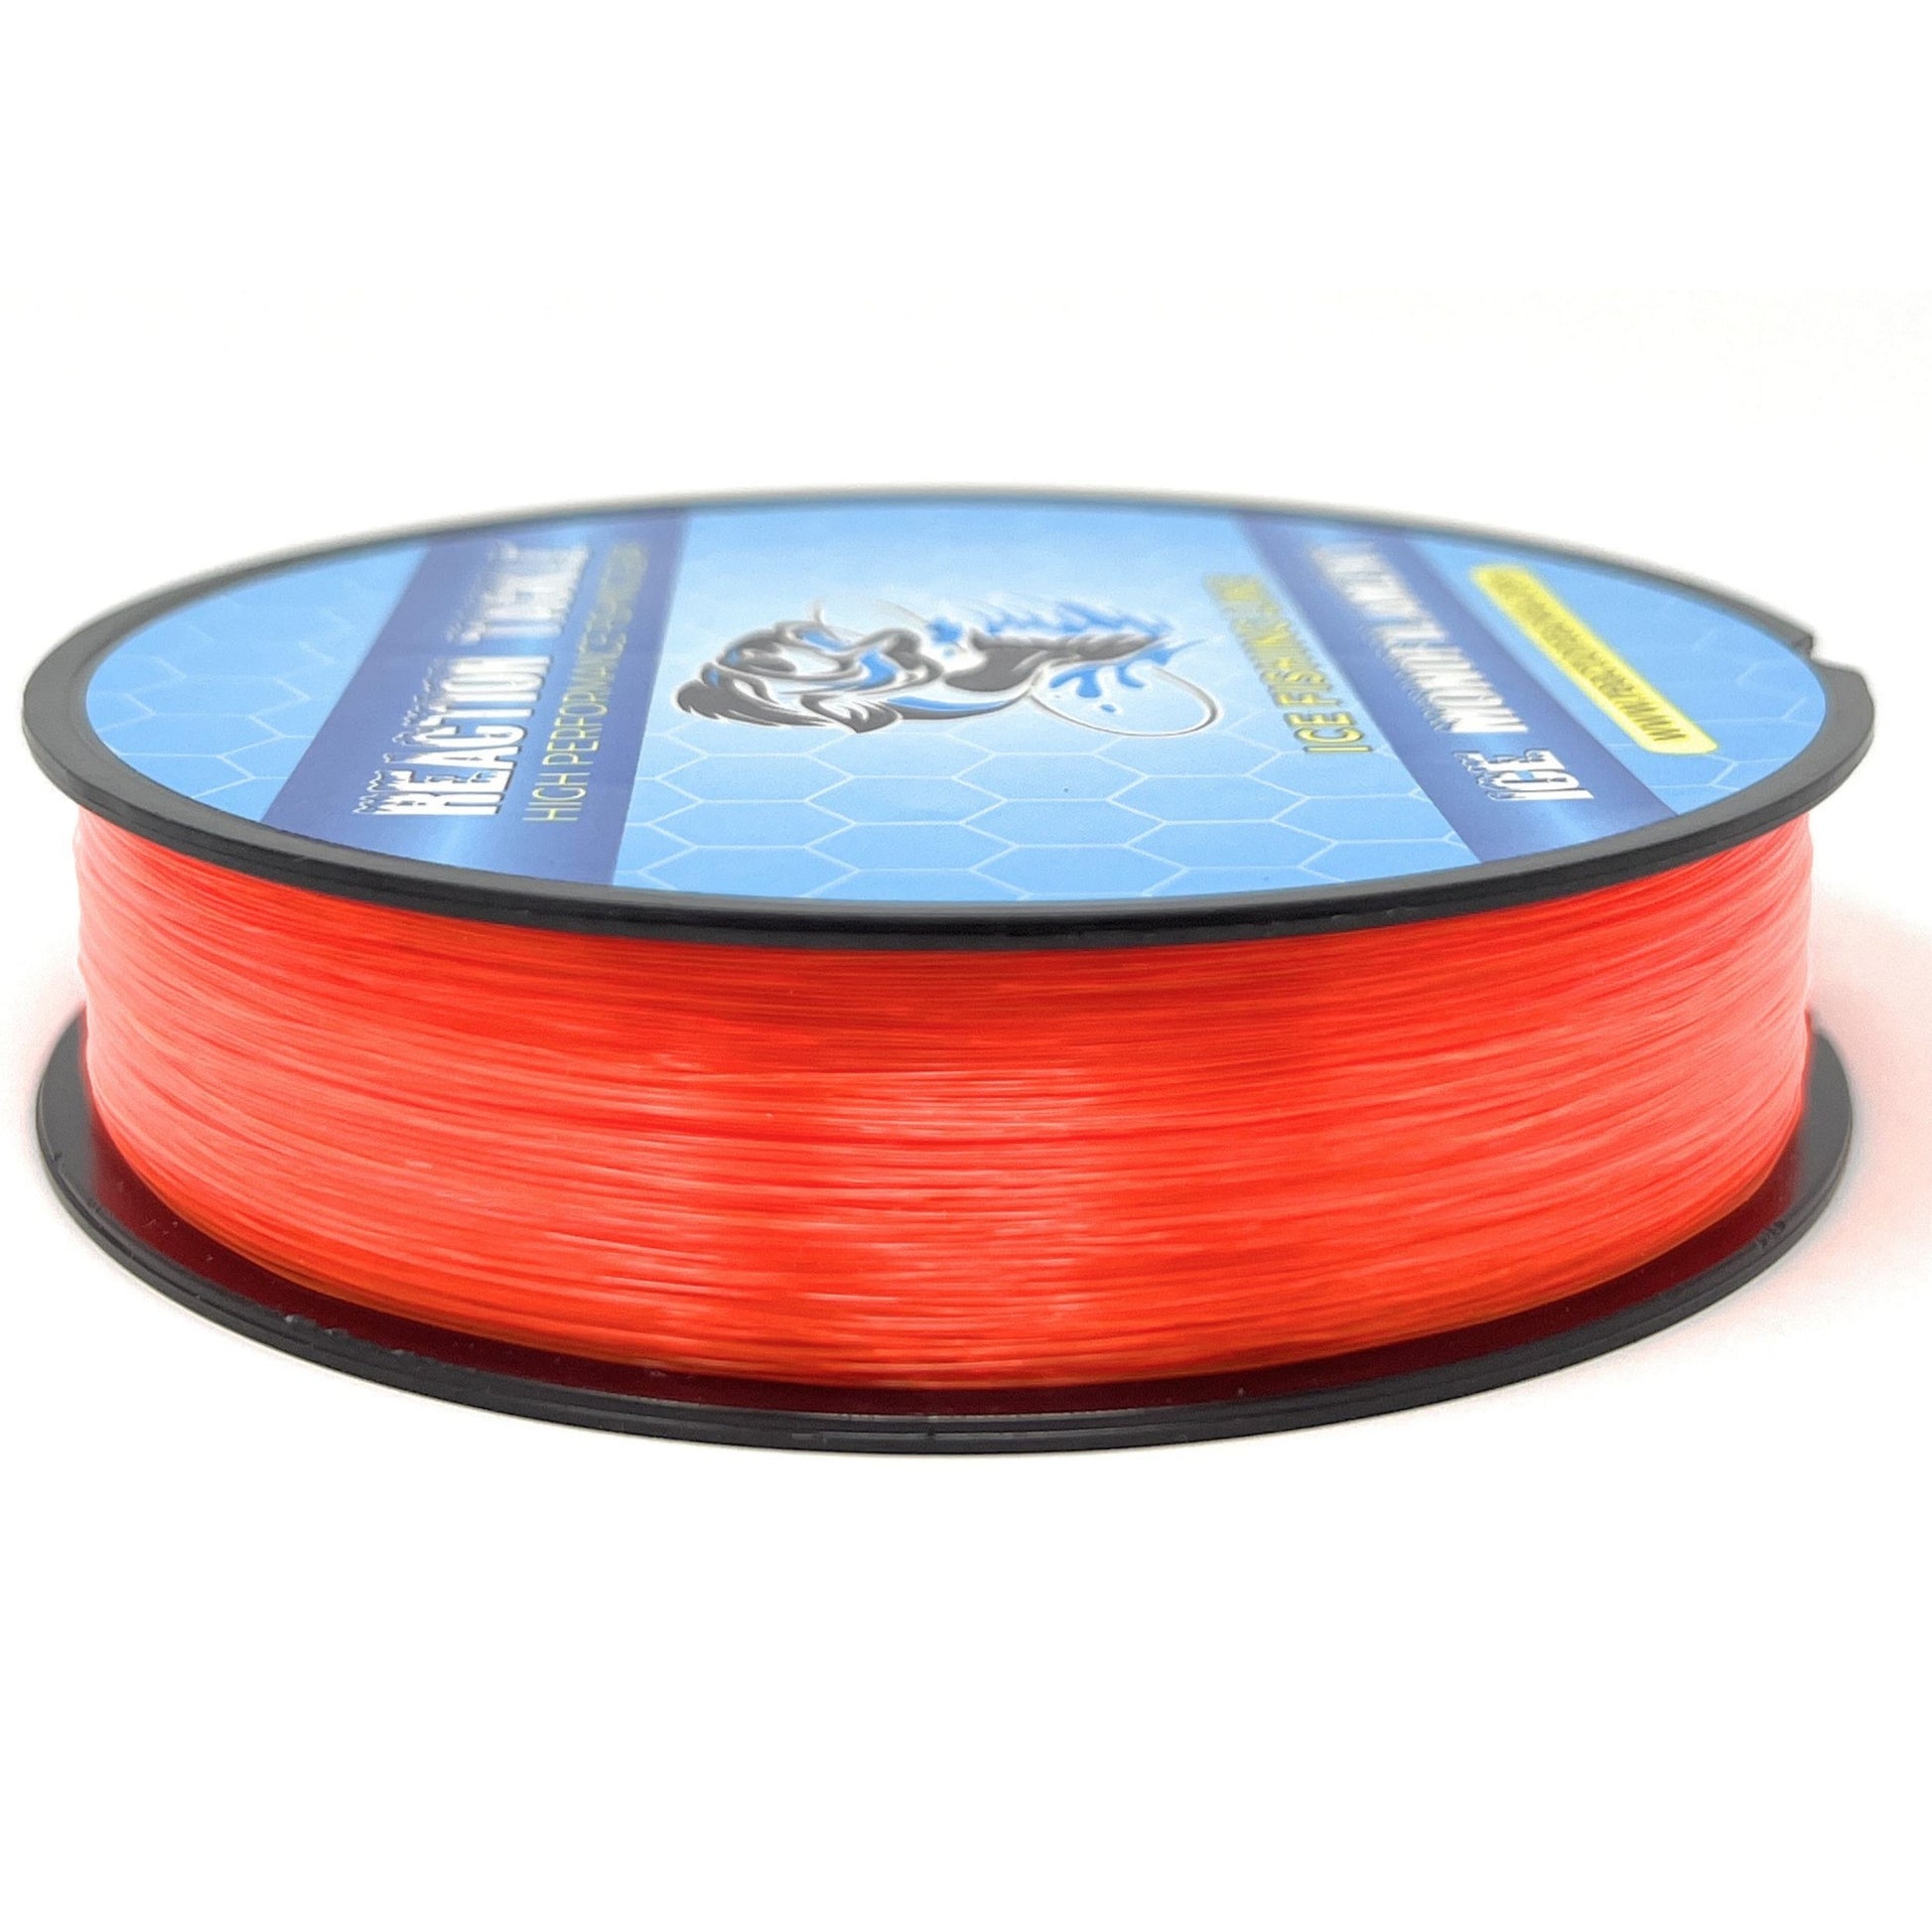 100m Coloured Bundle Thick Nylon Fishing Line, High Strength